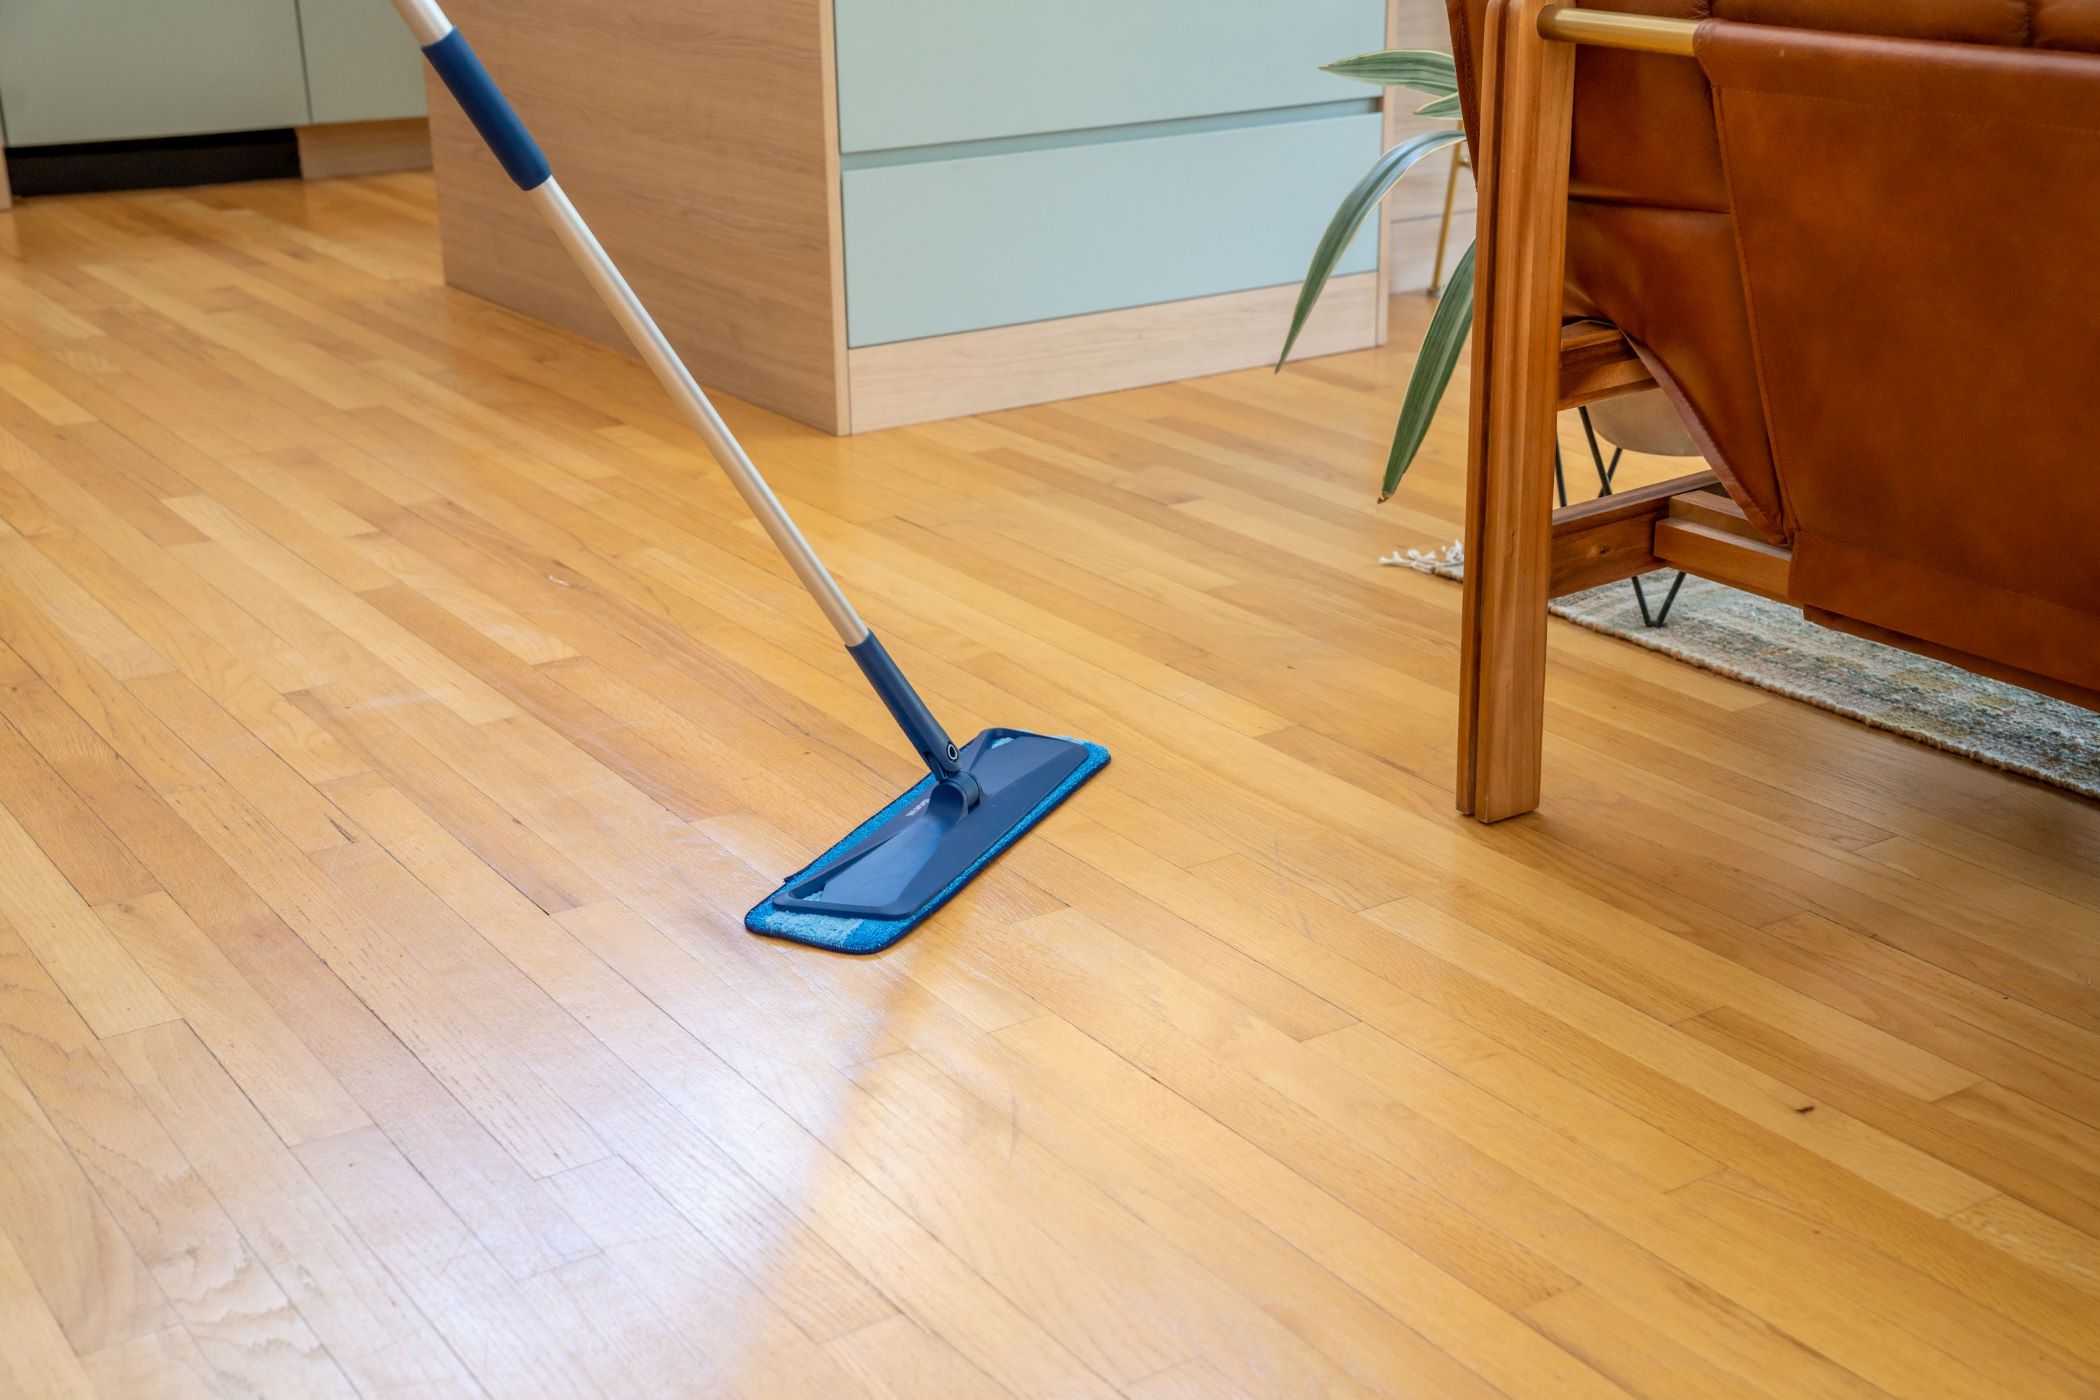 How To Mop Hardwood Floors With Vinegar